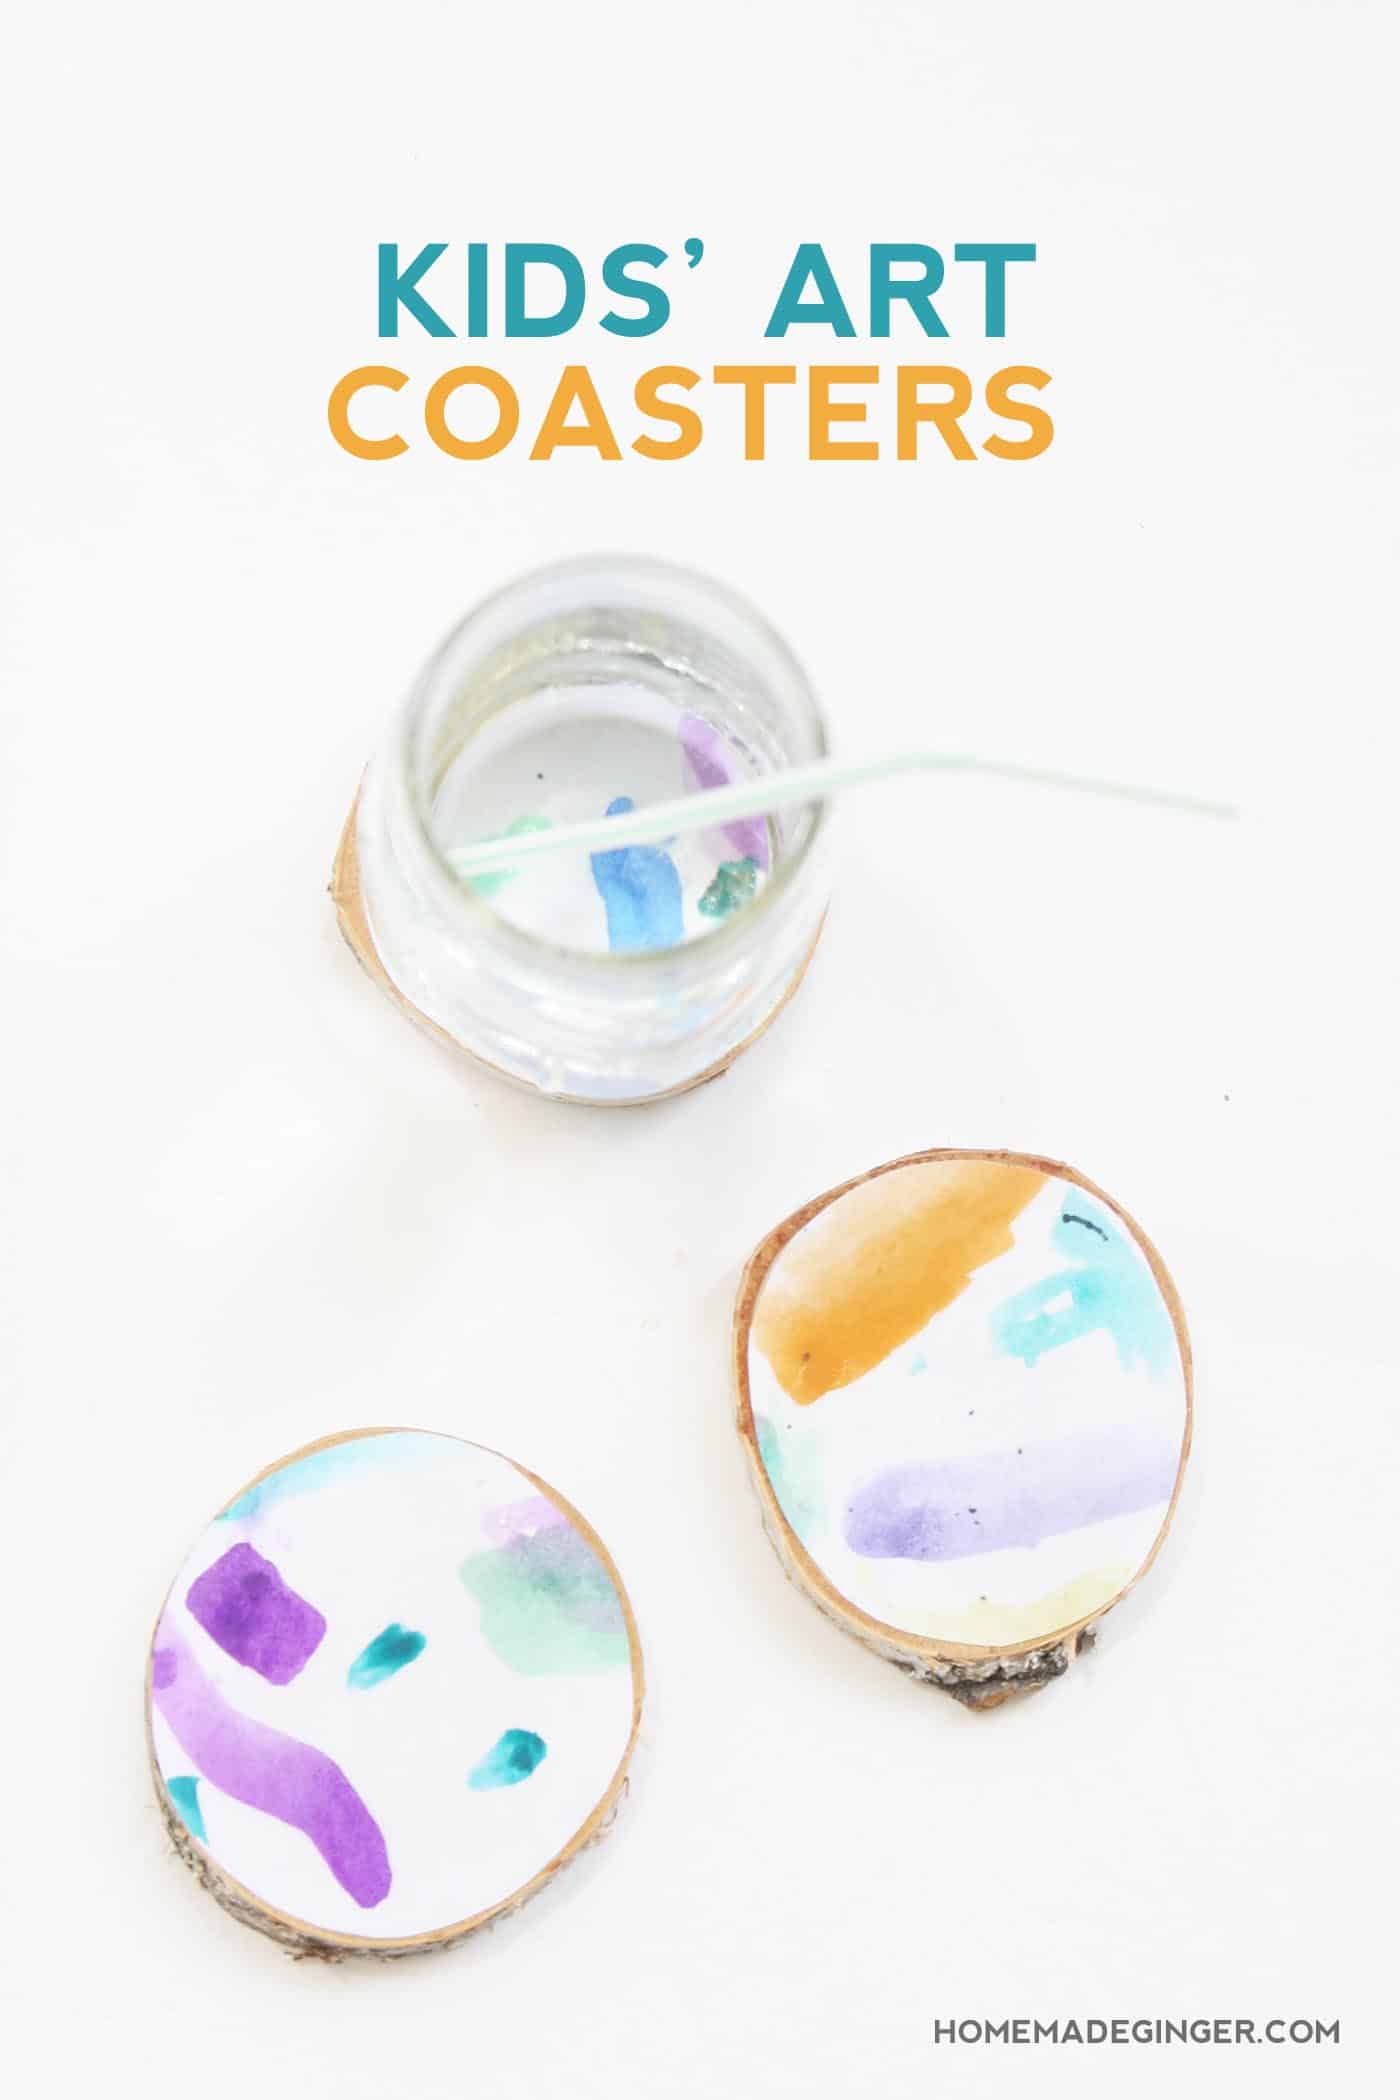 Kids Art Coasters Make Great Gifts